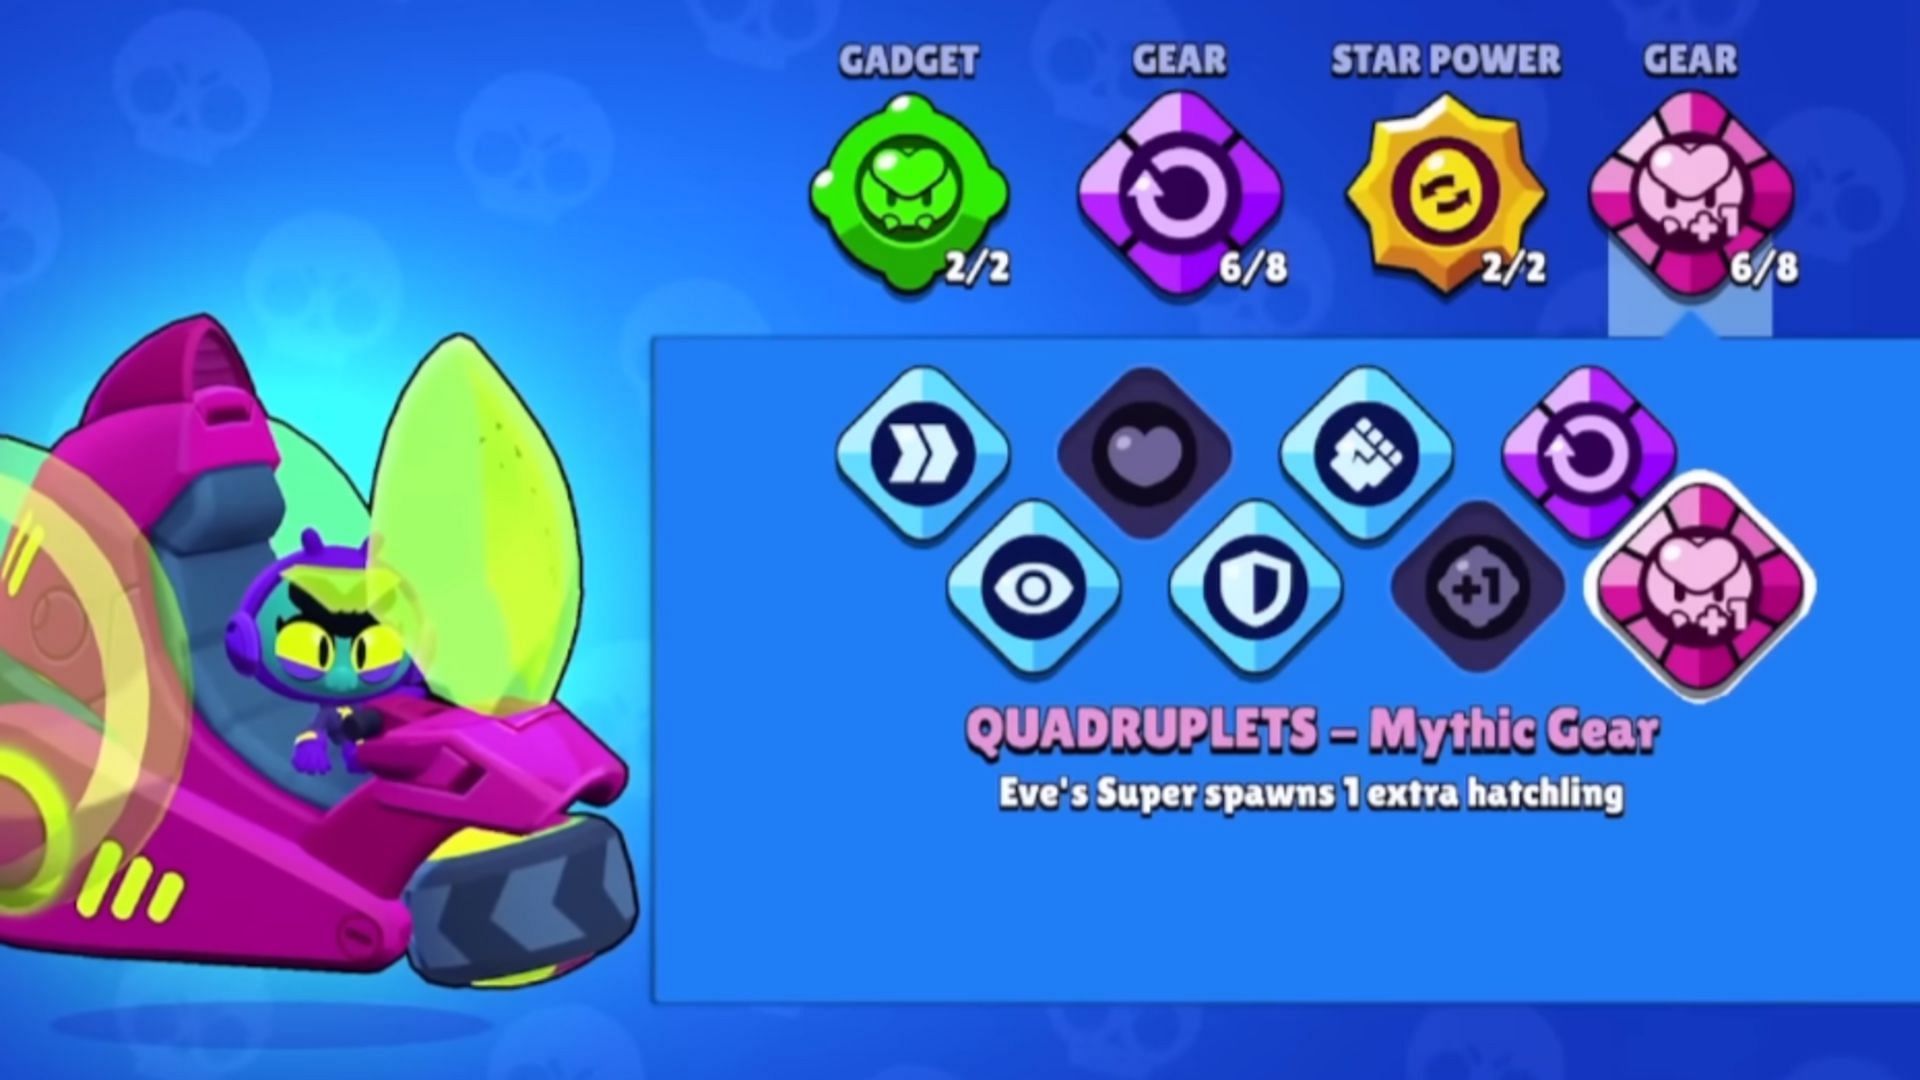 Quadruplets - Mythic Gear (Image via Supercell)